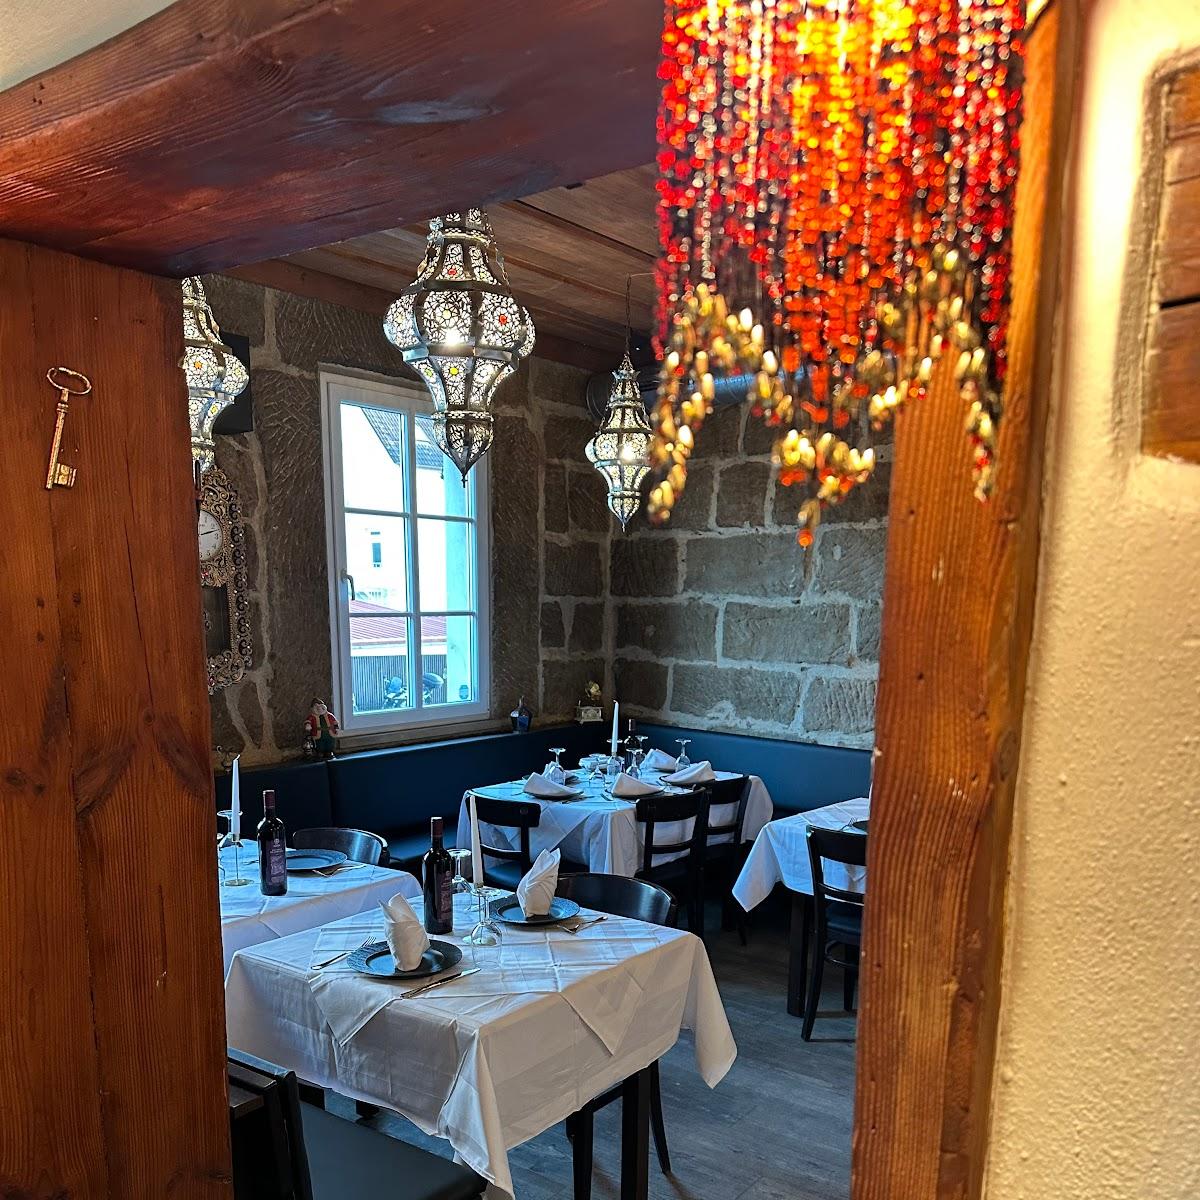 Restaurant "Hana Restaurant" in Erlangen